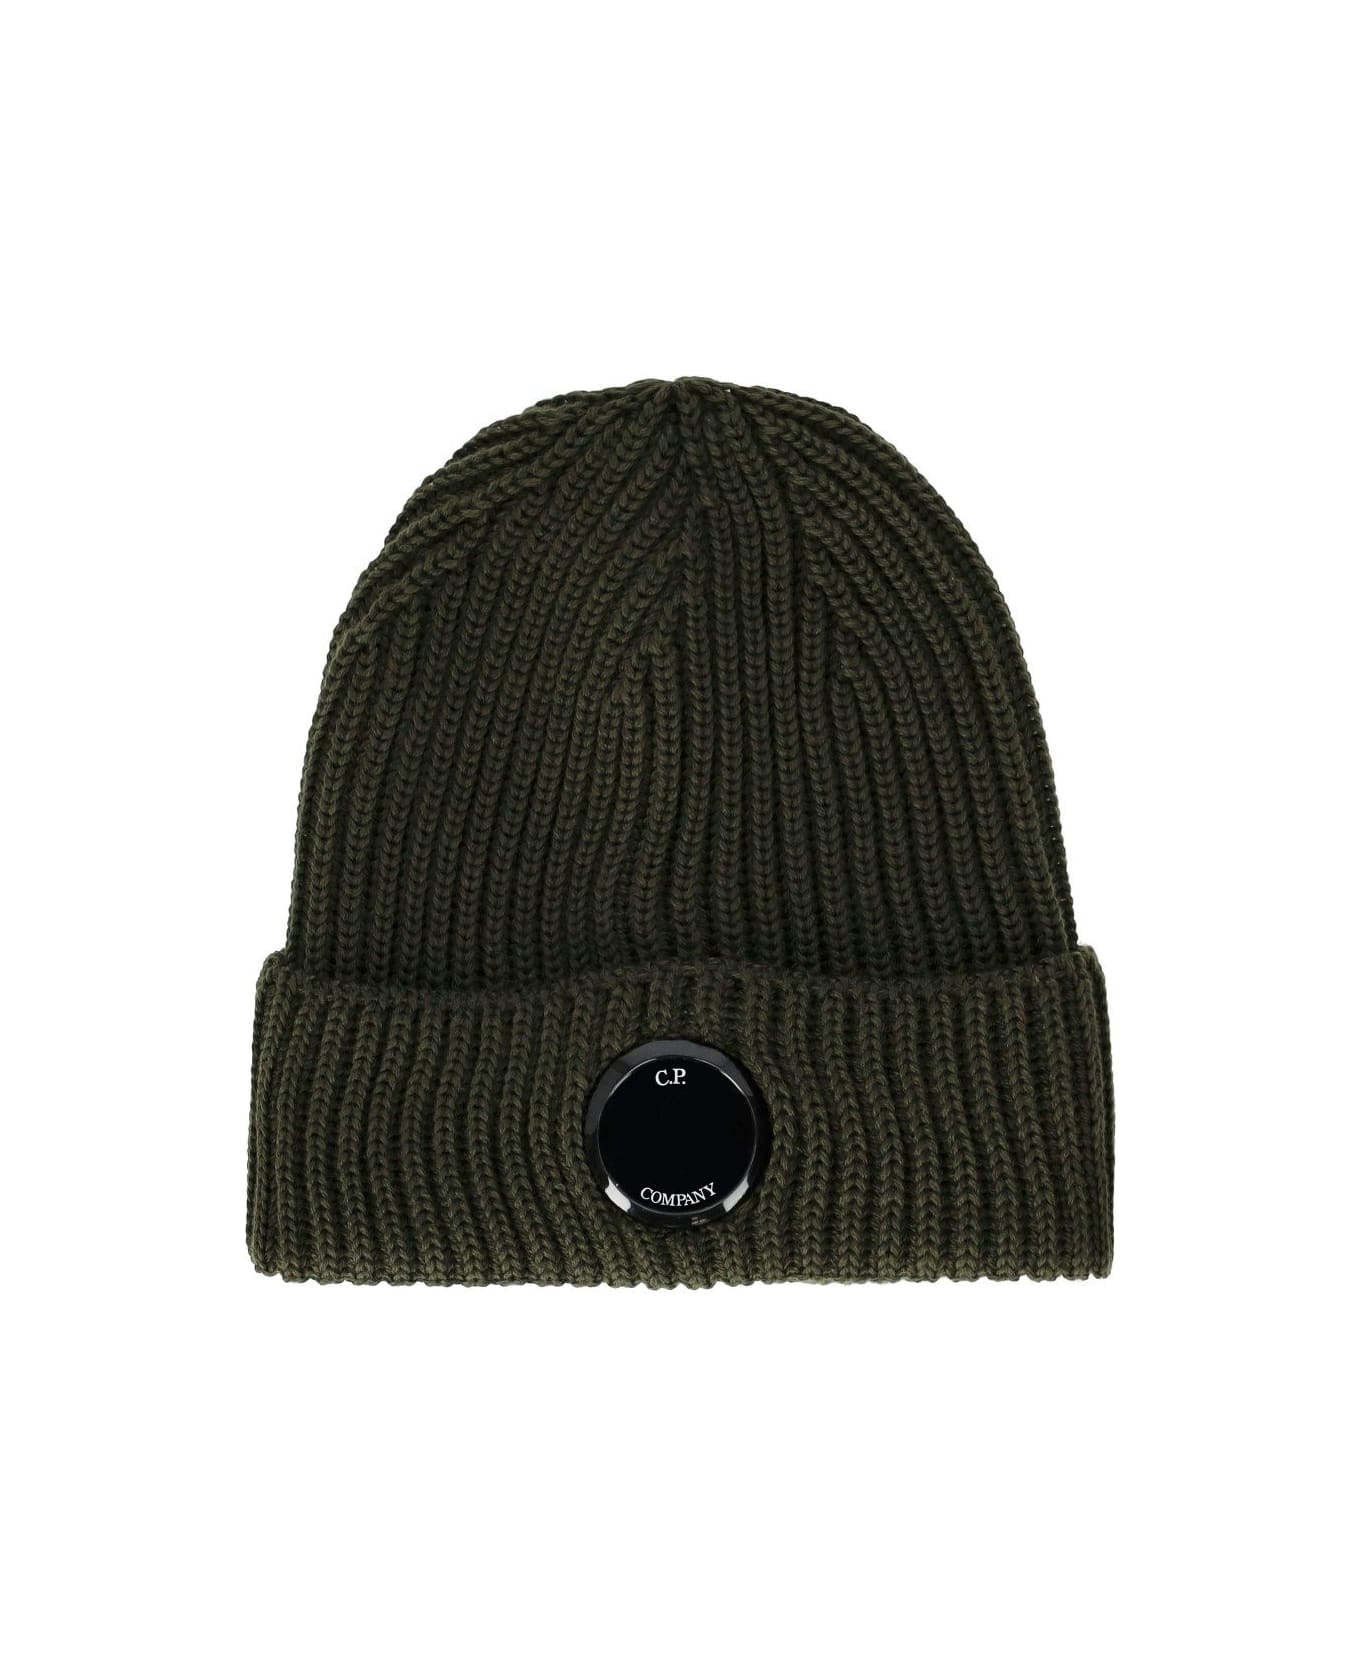 C.P. Company Military Green Ribbed Beanie - Militare 帽子